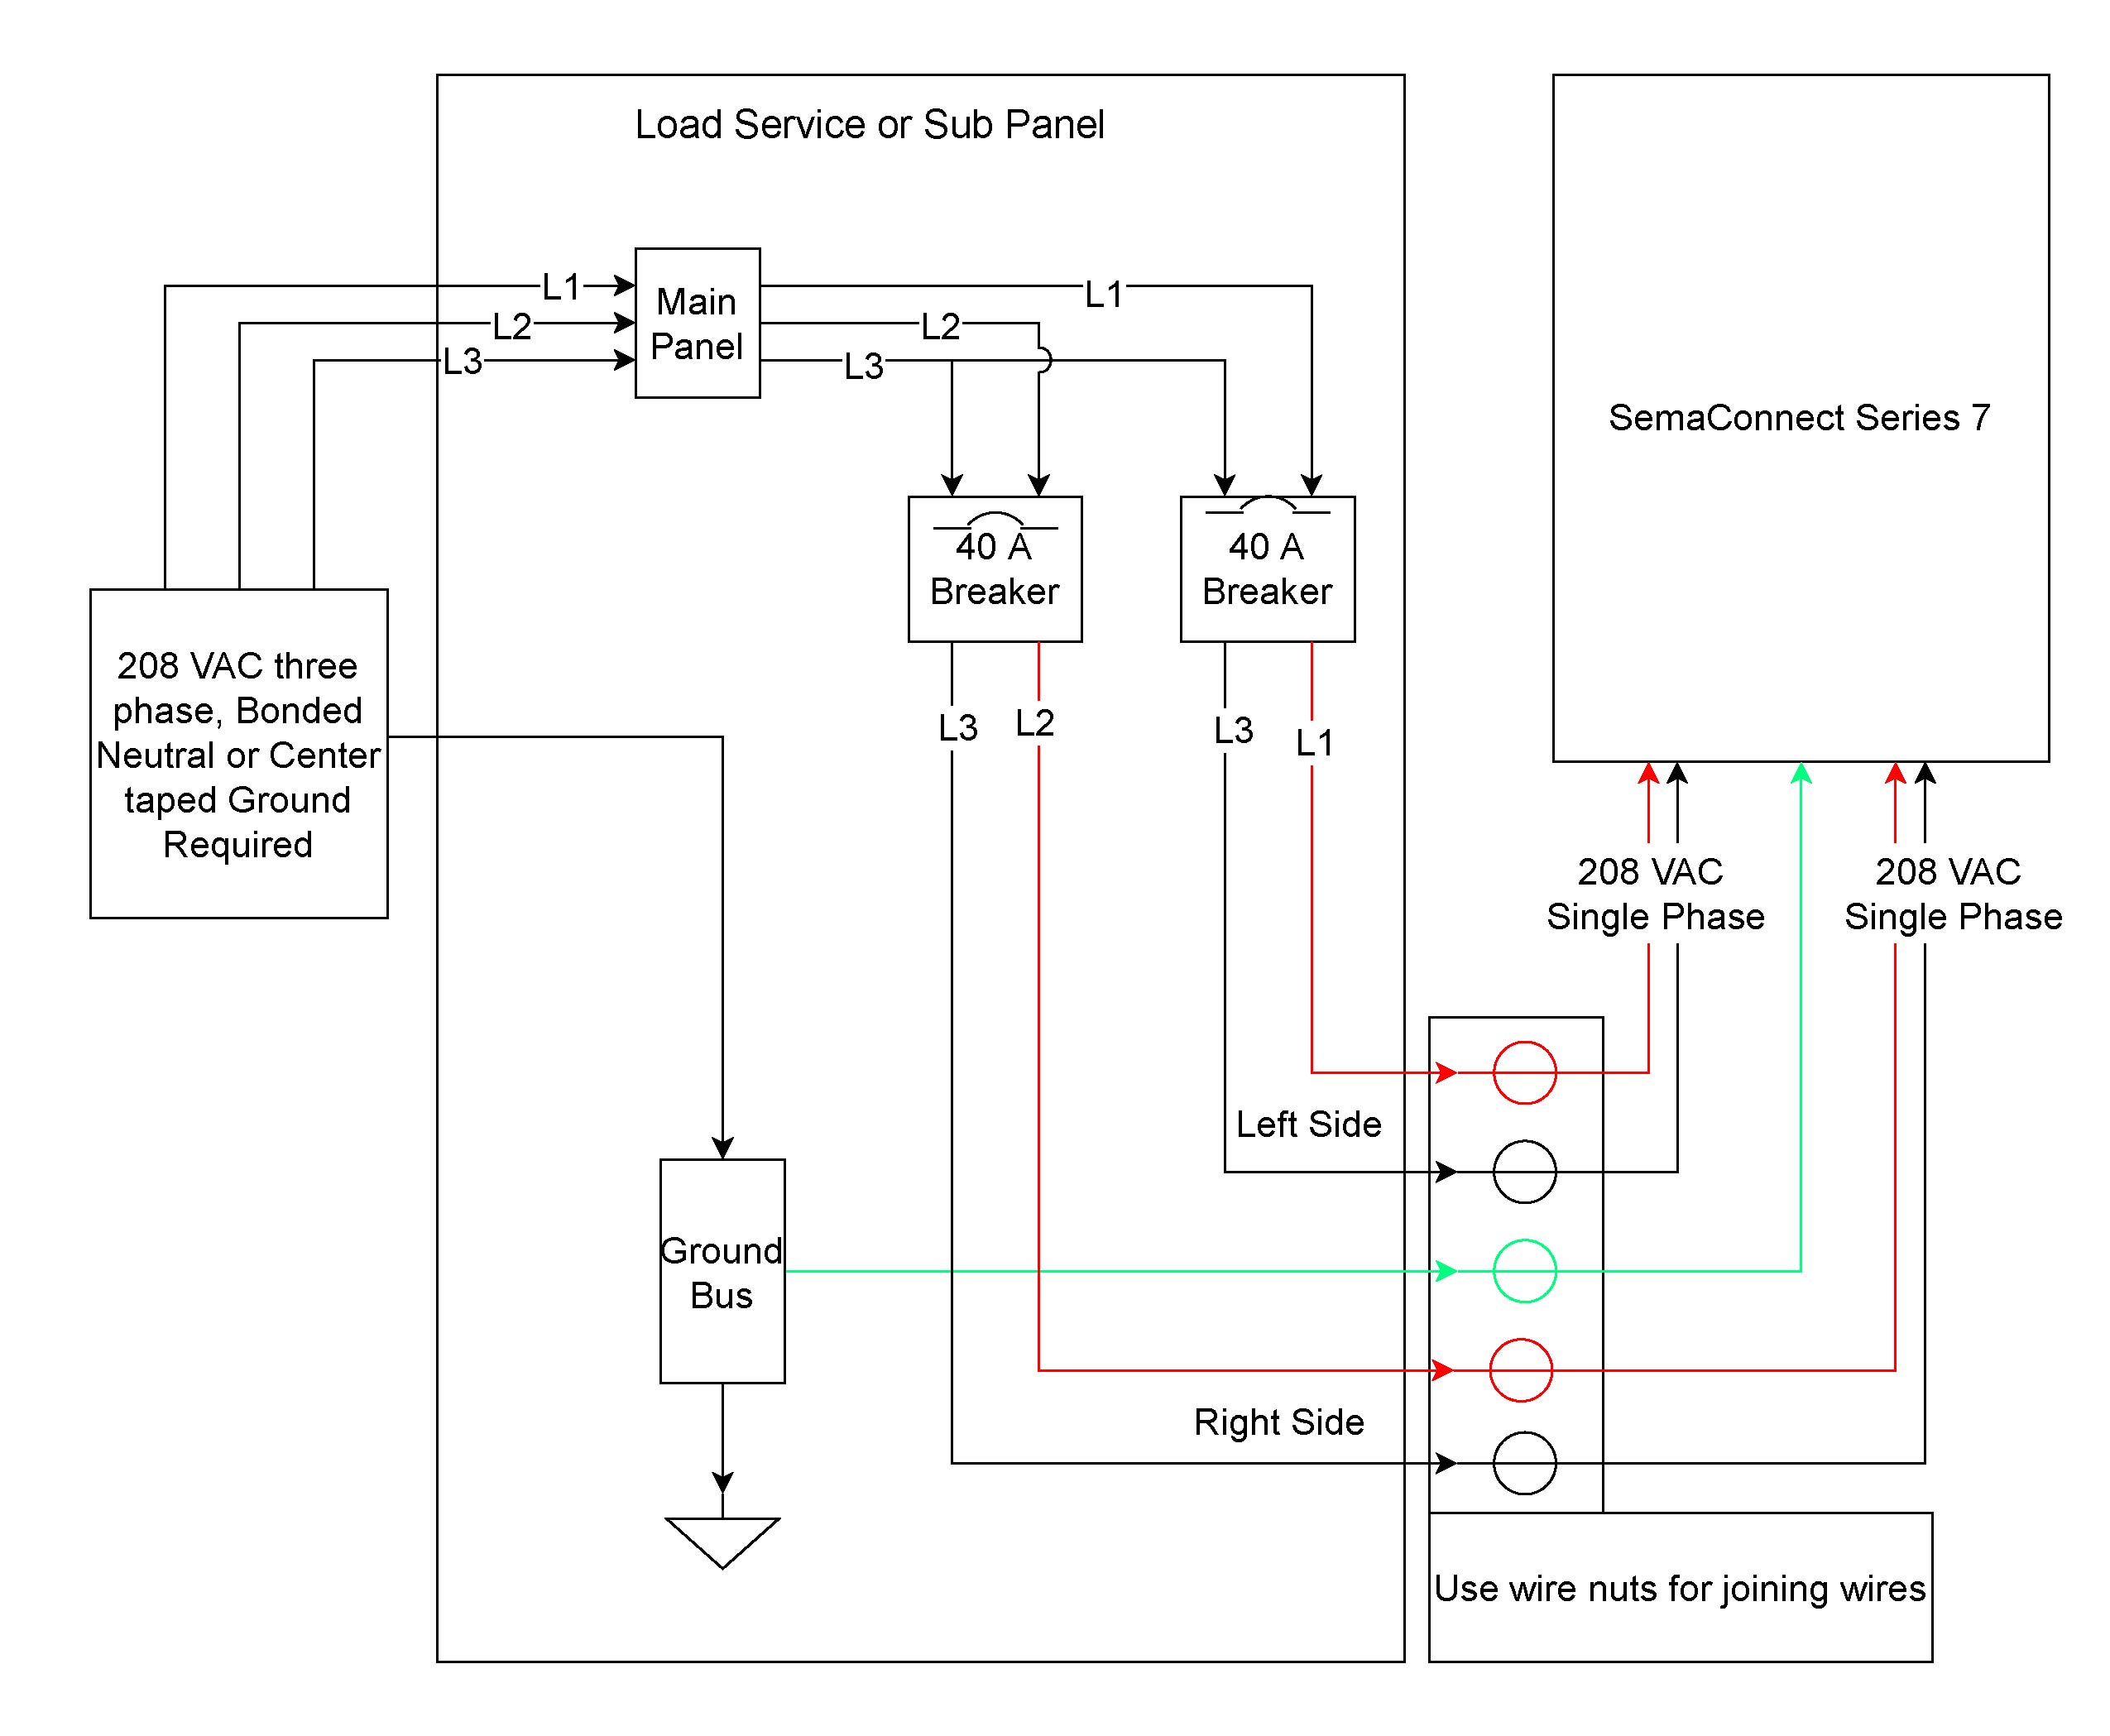 umc404 audio interface wiring diagram